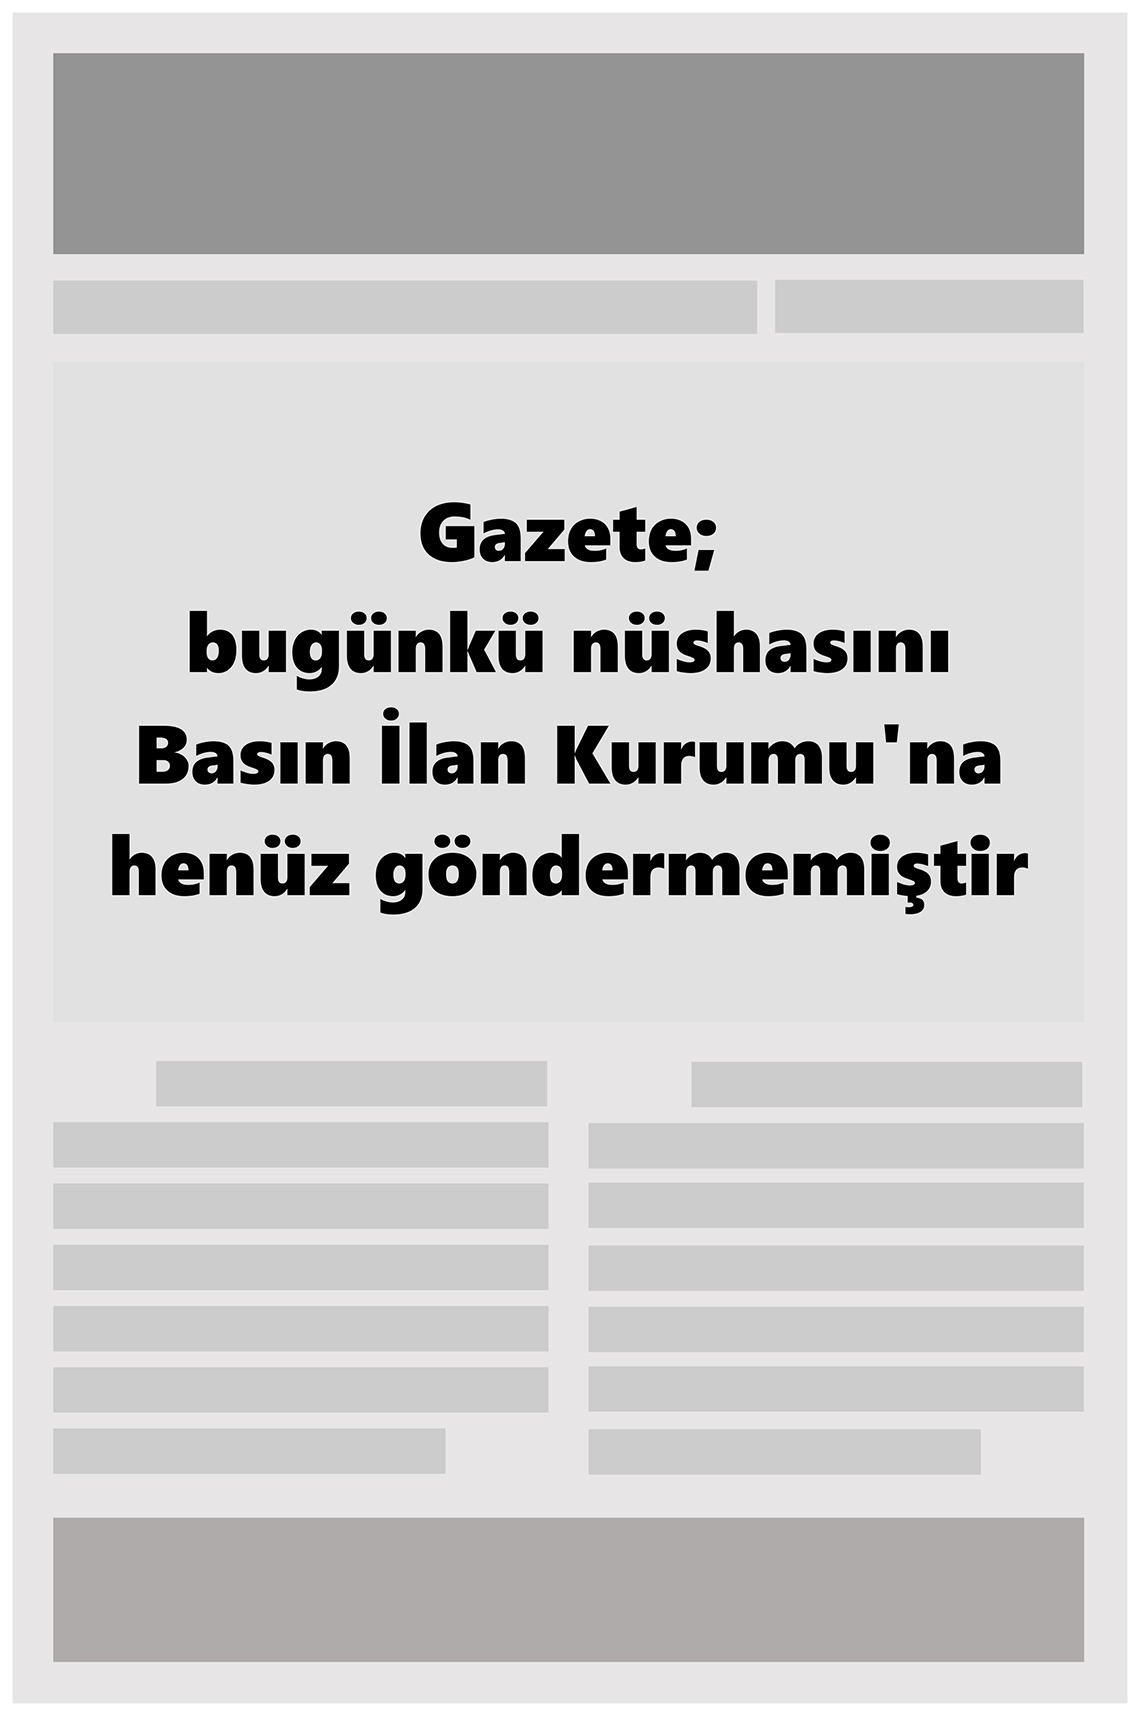 Gaziantep 27 Gazete Manşeti